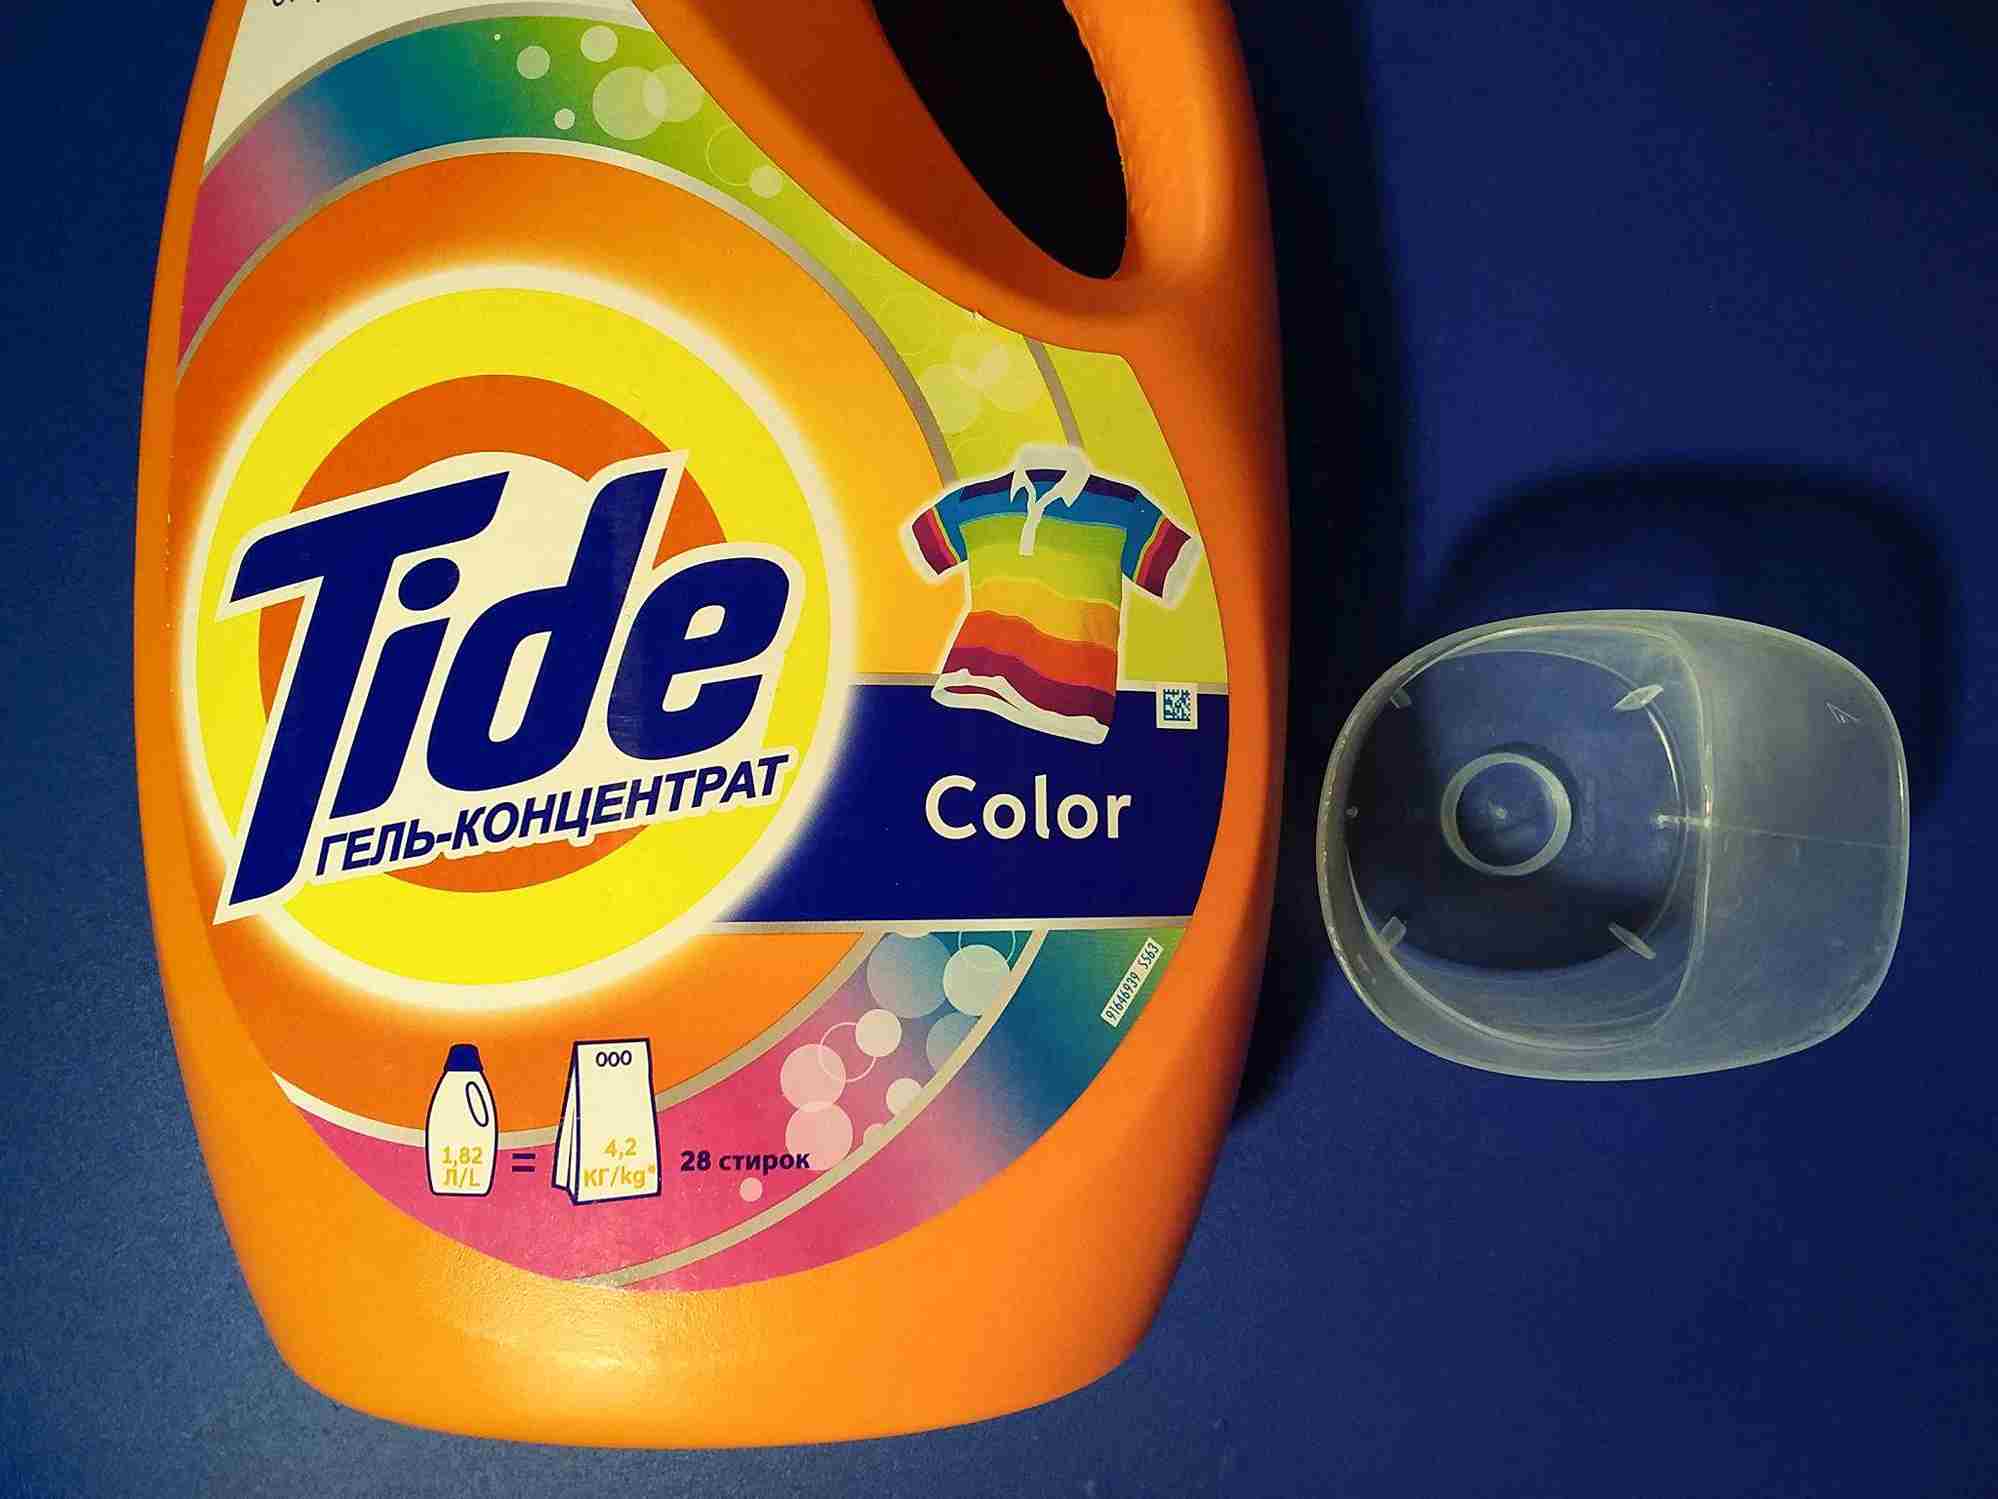 Xtra laundry detergent vs tide